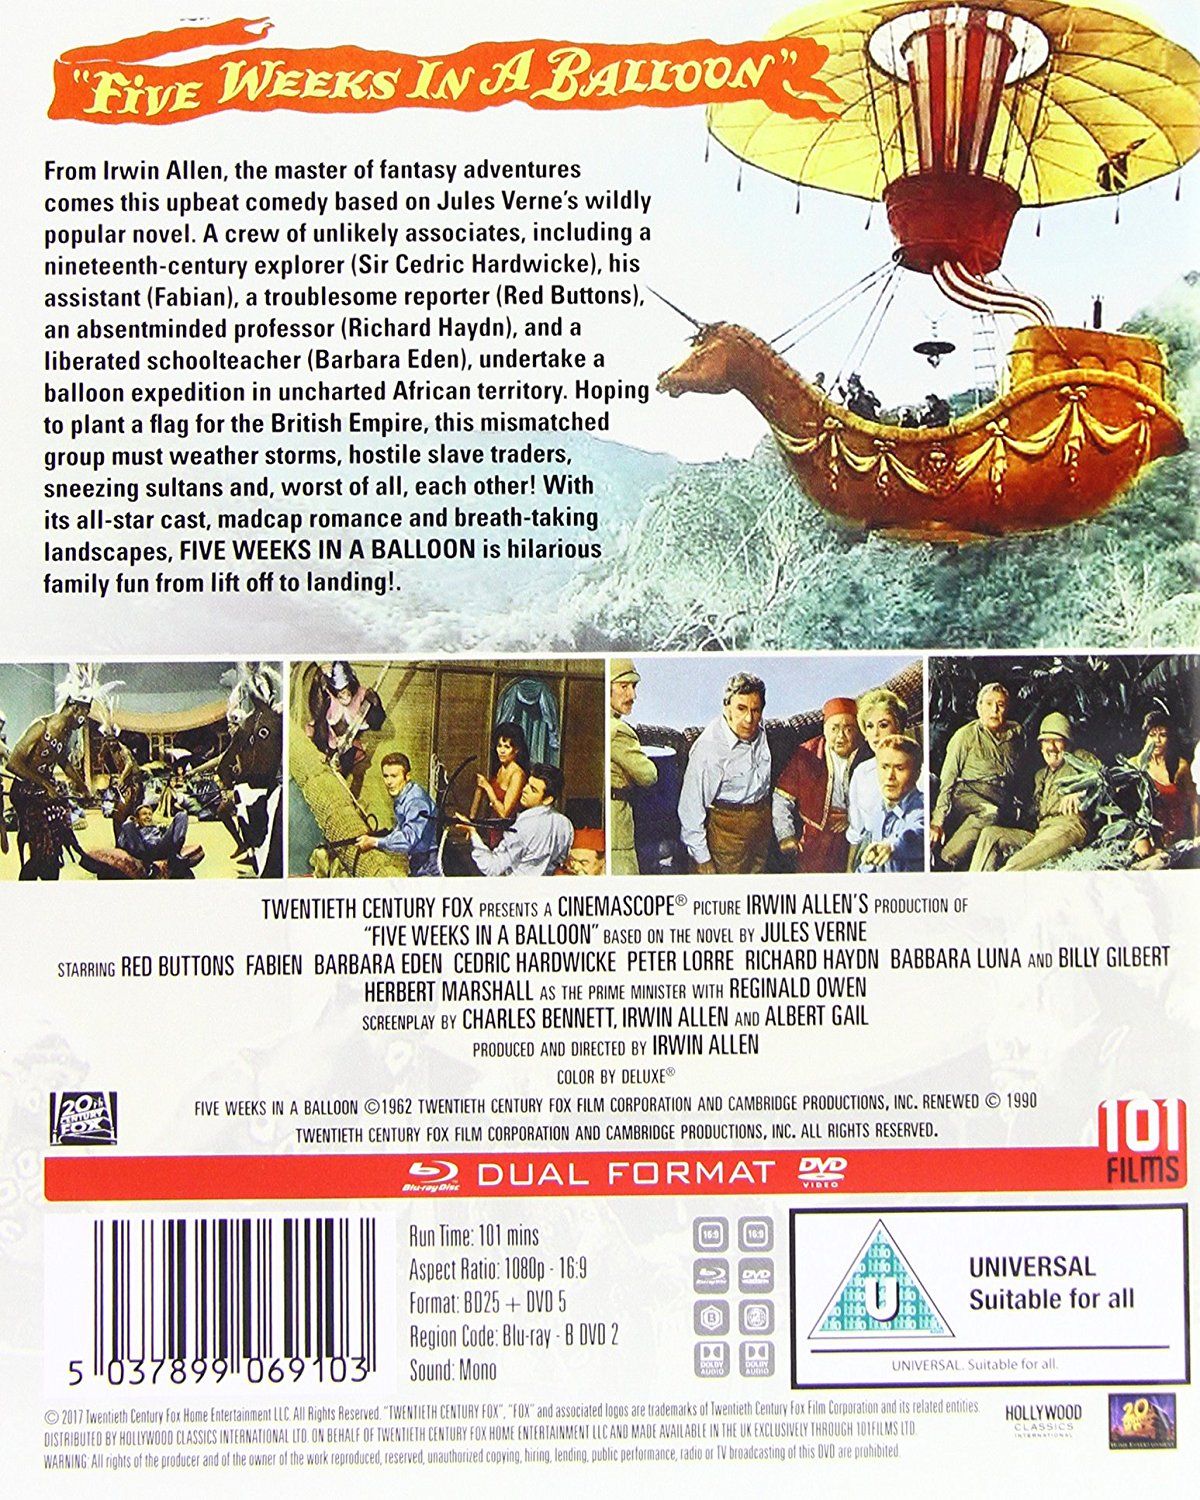 Peter Lorre در صحنه فیلم سینمایی Five Weeks in a Balloon به همراه سدریک هاردویک، BarBara Luna، Richard Haydn، رد باتنز، Fabian و Barbara Eden